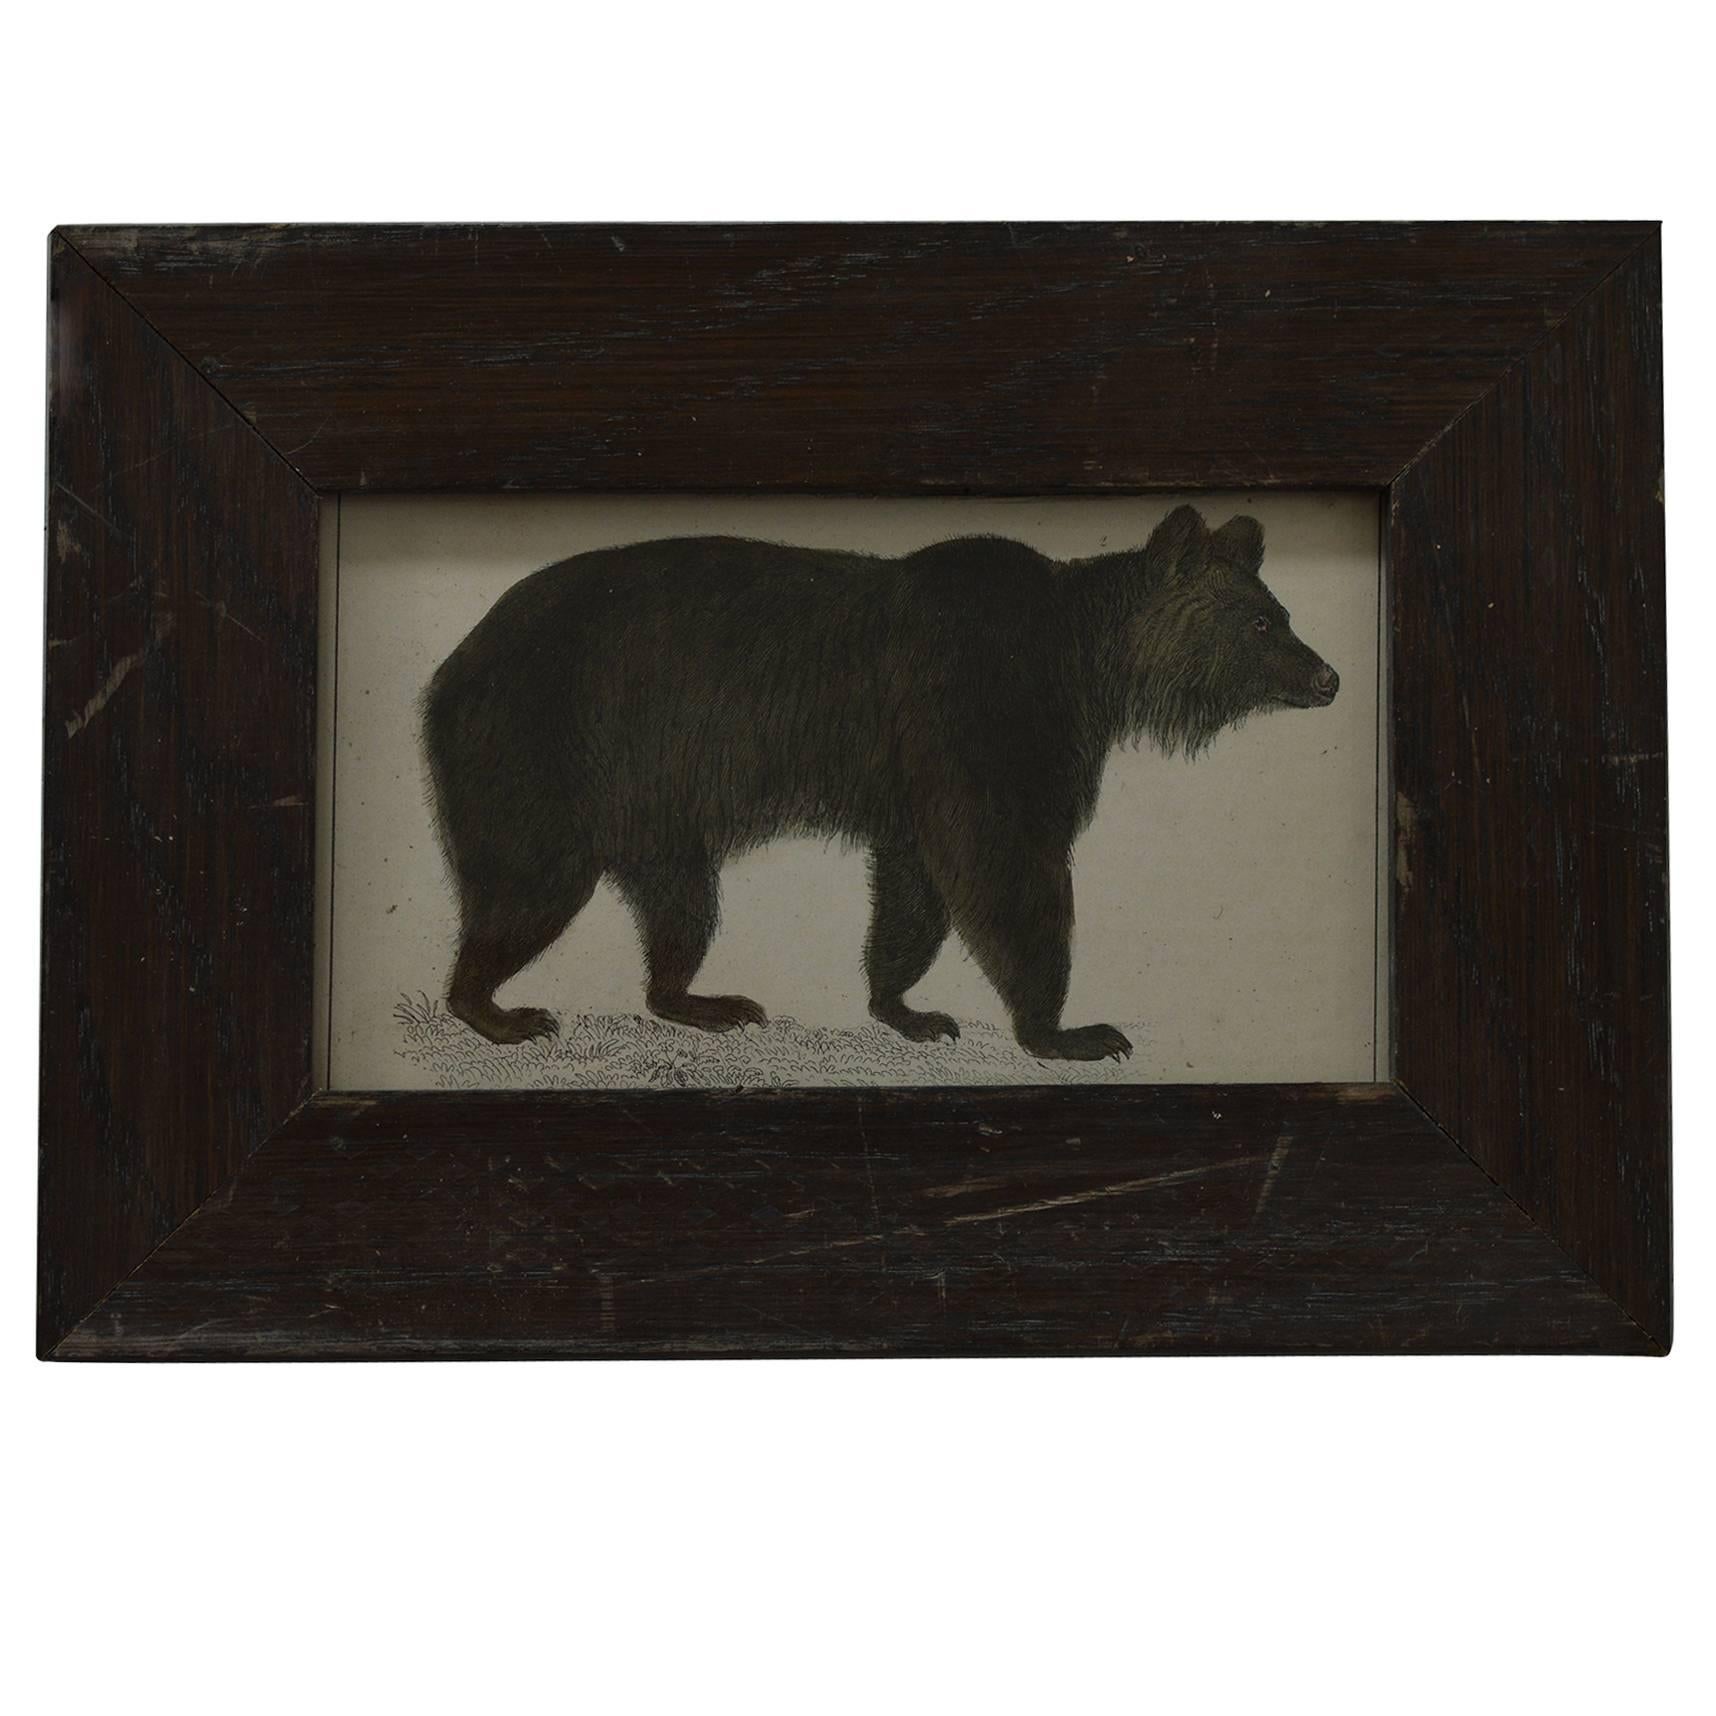 Original Antique Print of a Brown Bear, English, circa 1850